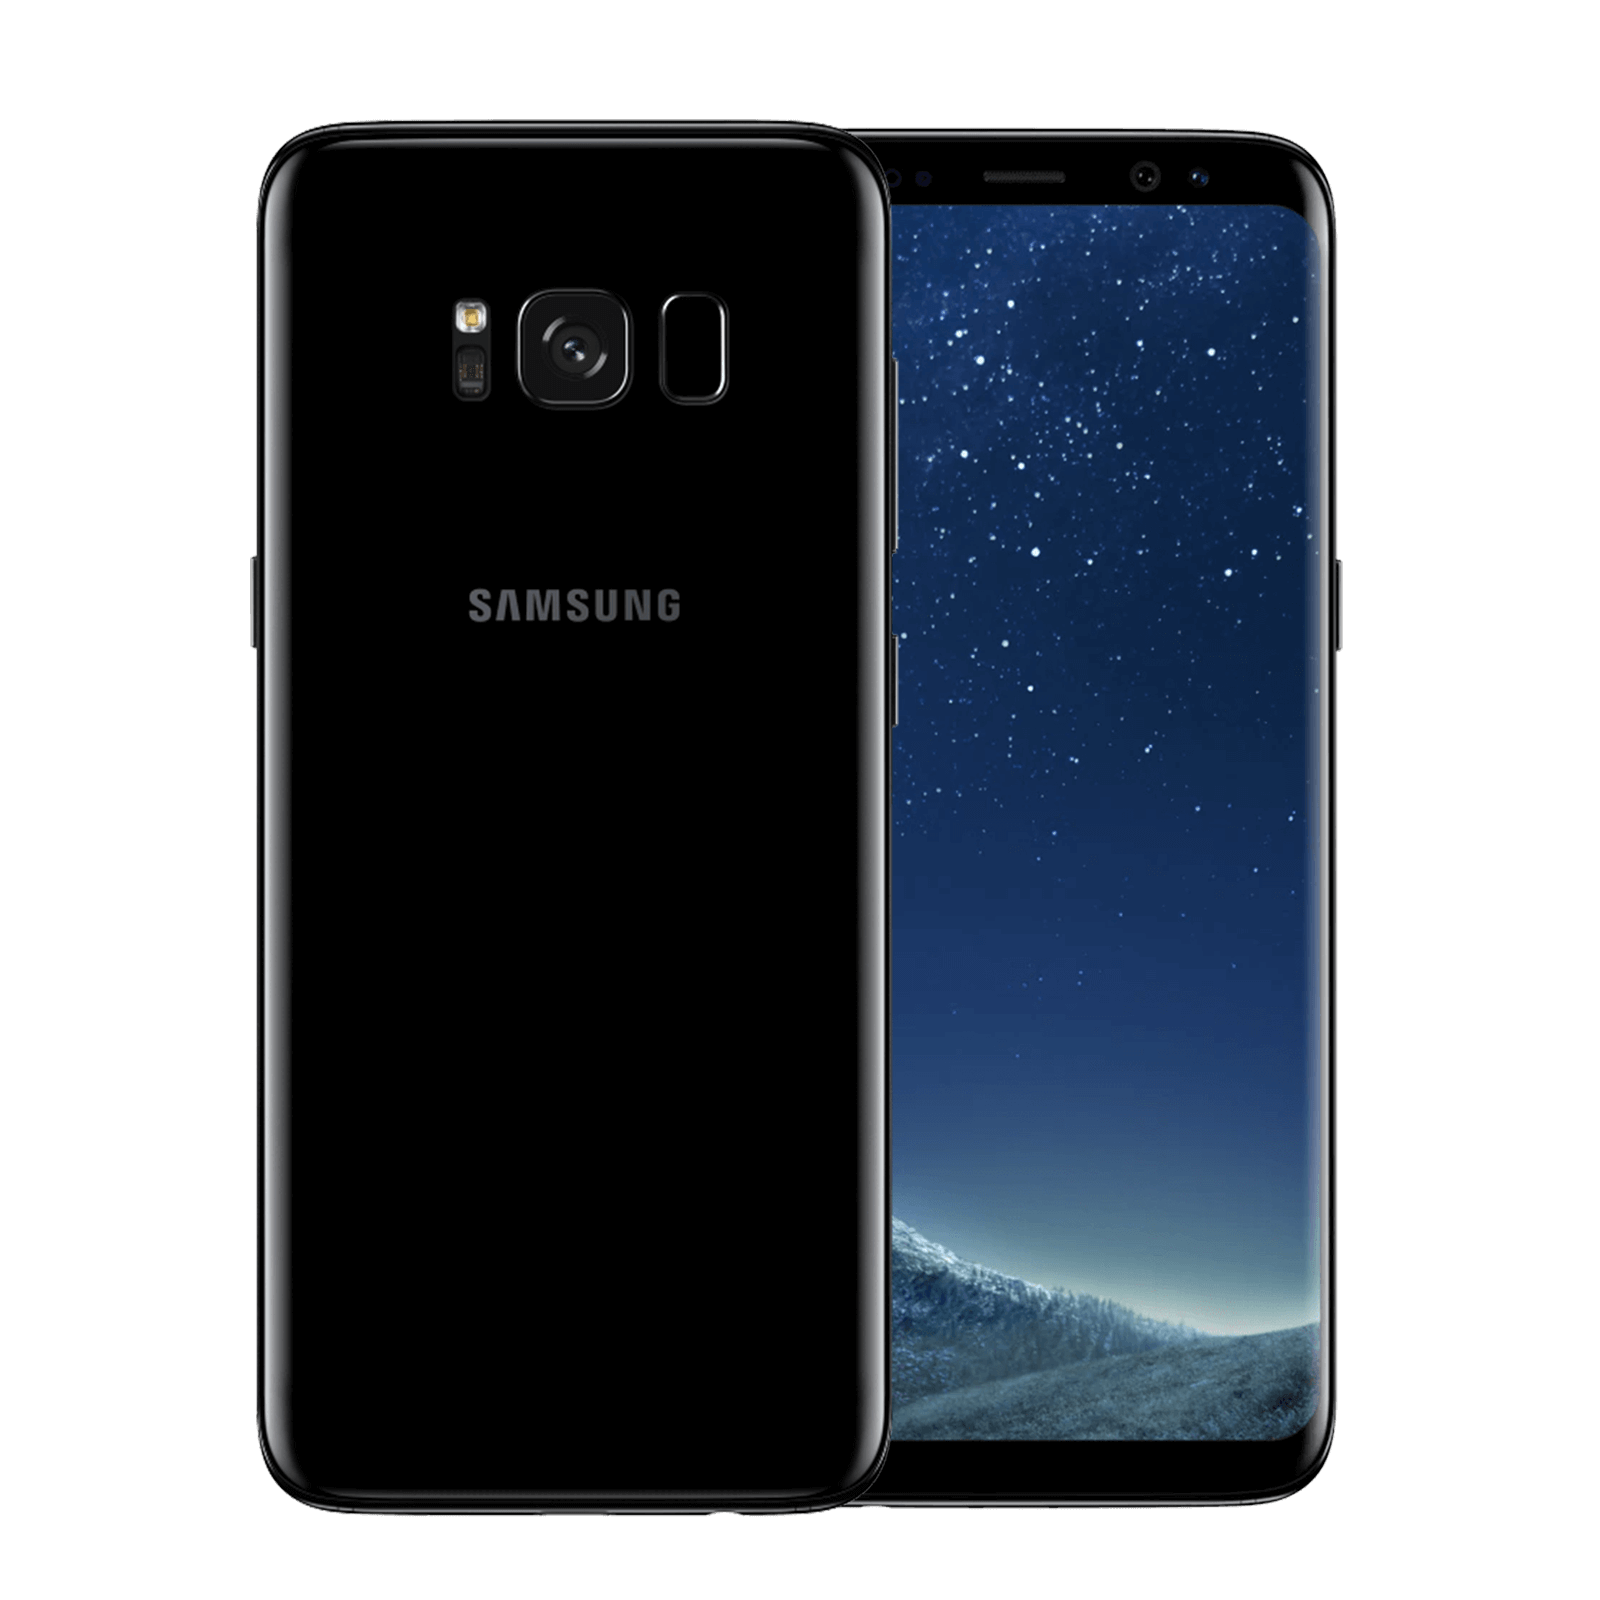 Samsung Galaxy S8 Plus 64GB Black Good - Unlocked